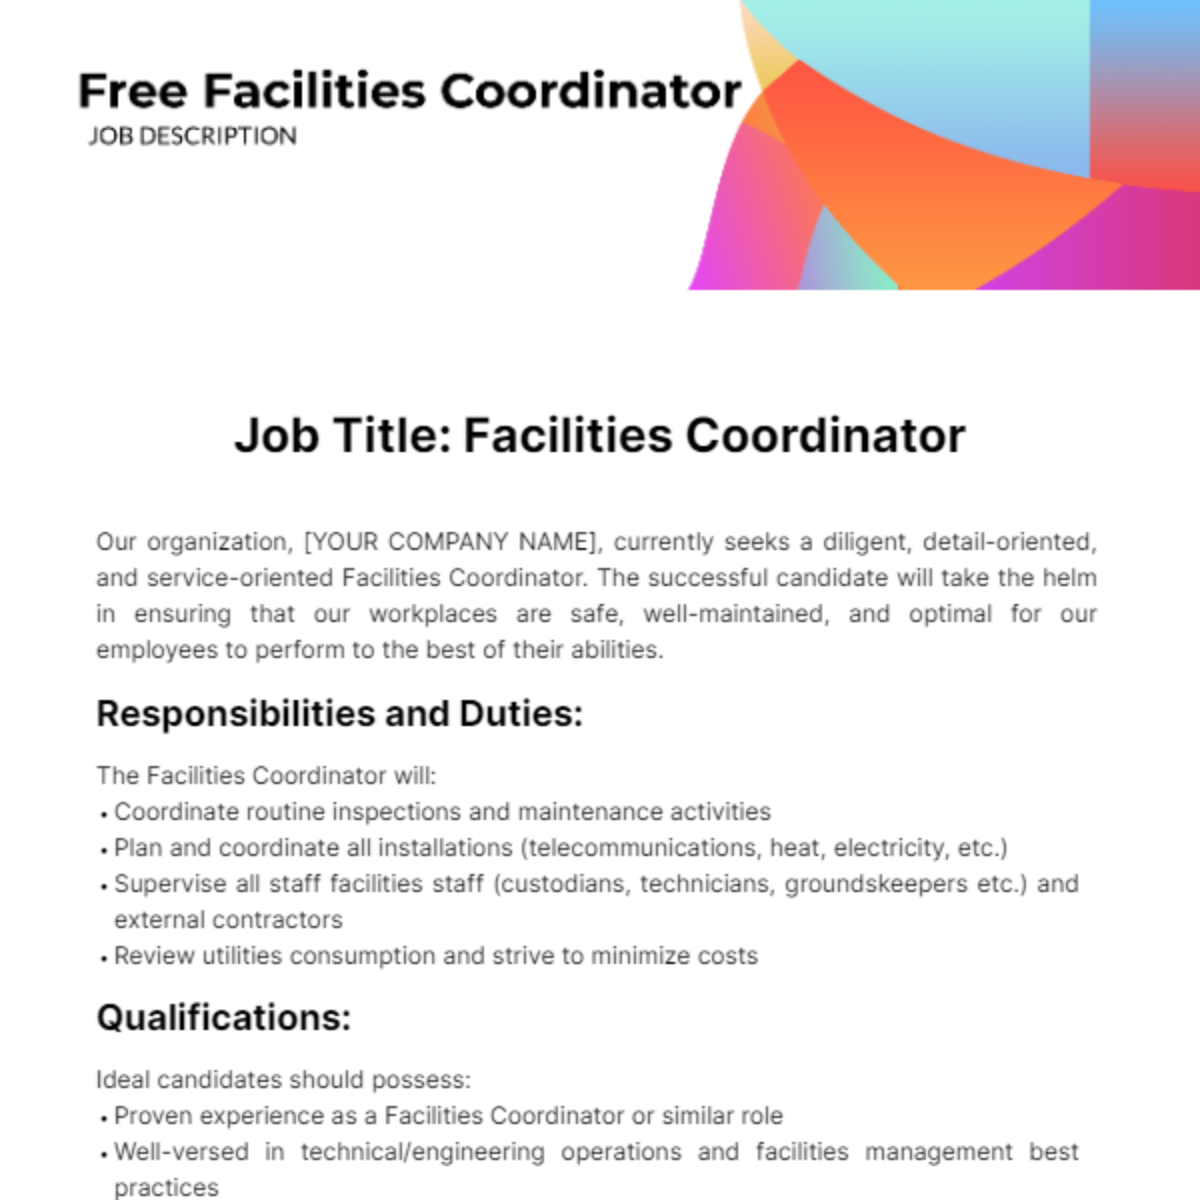 Free Facilities Coordinator Job Description Template